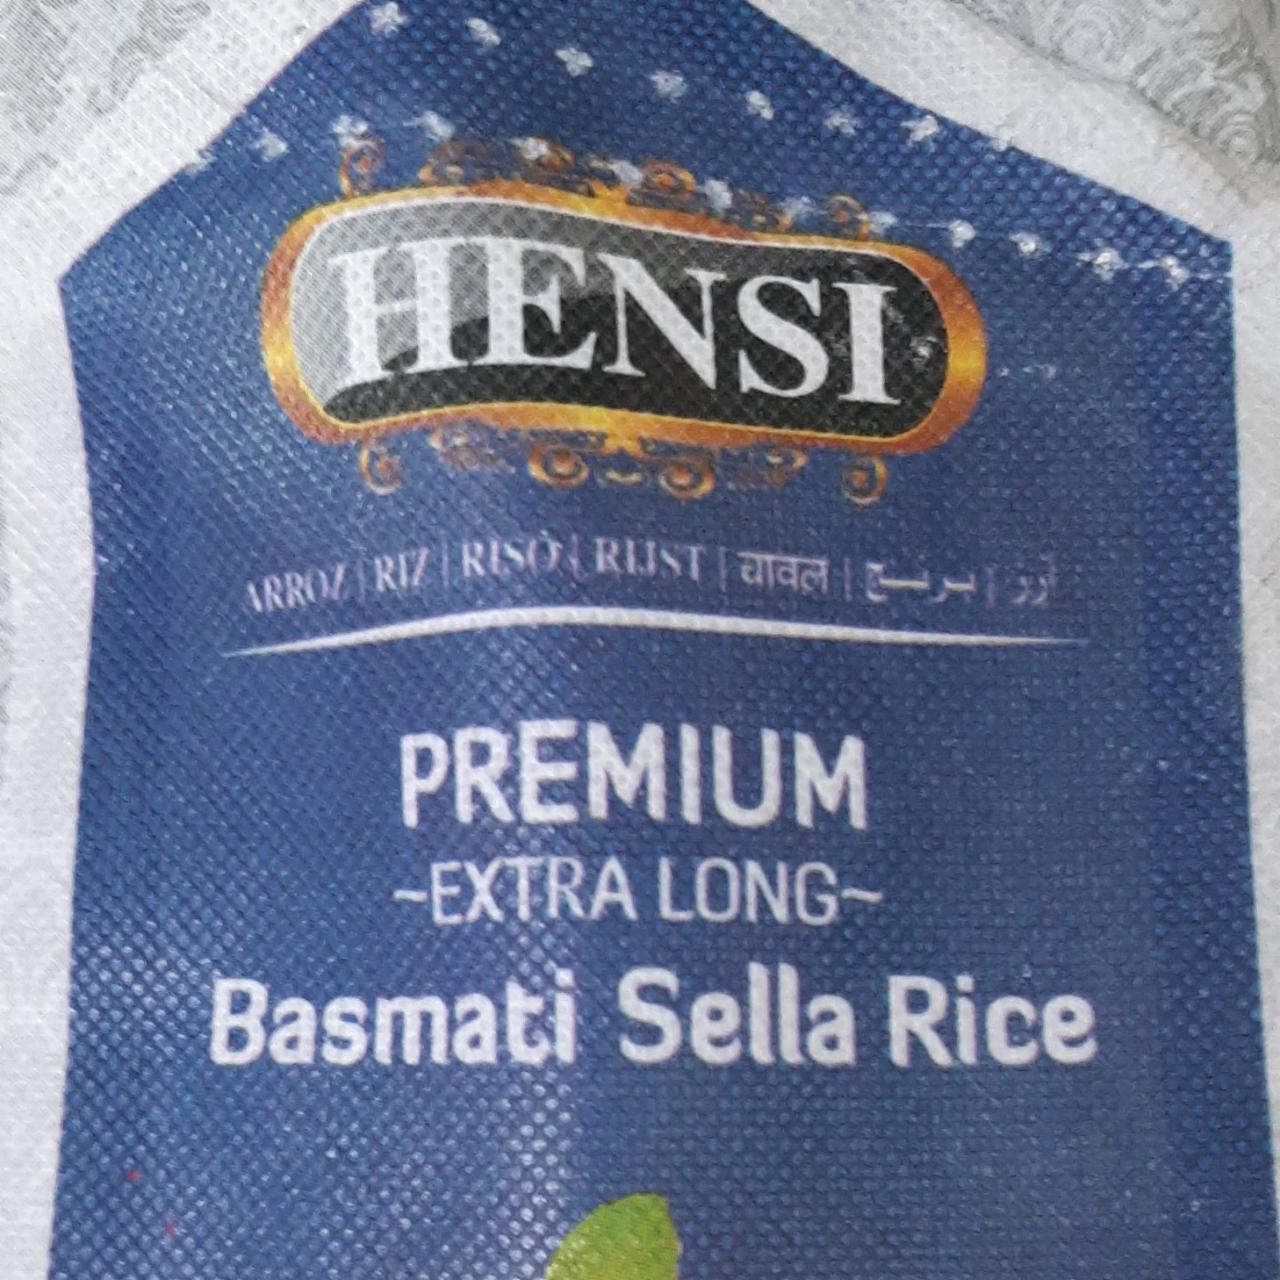 Фото - Басмати premium extra long Basmati Sella Rice Hensi